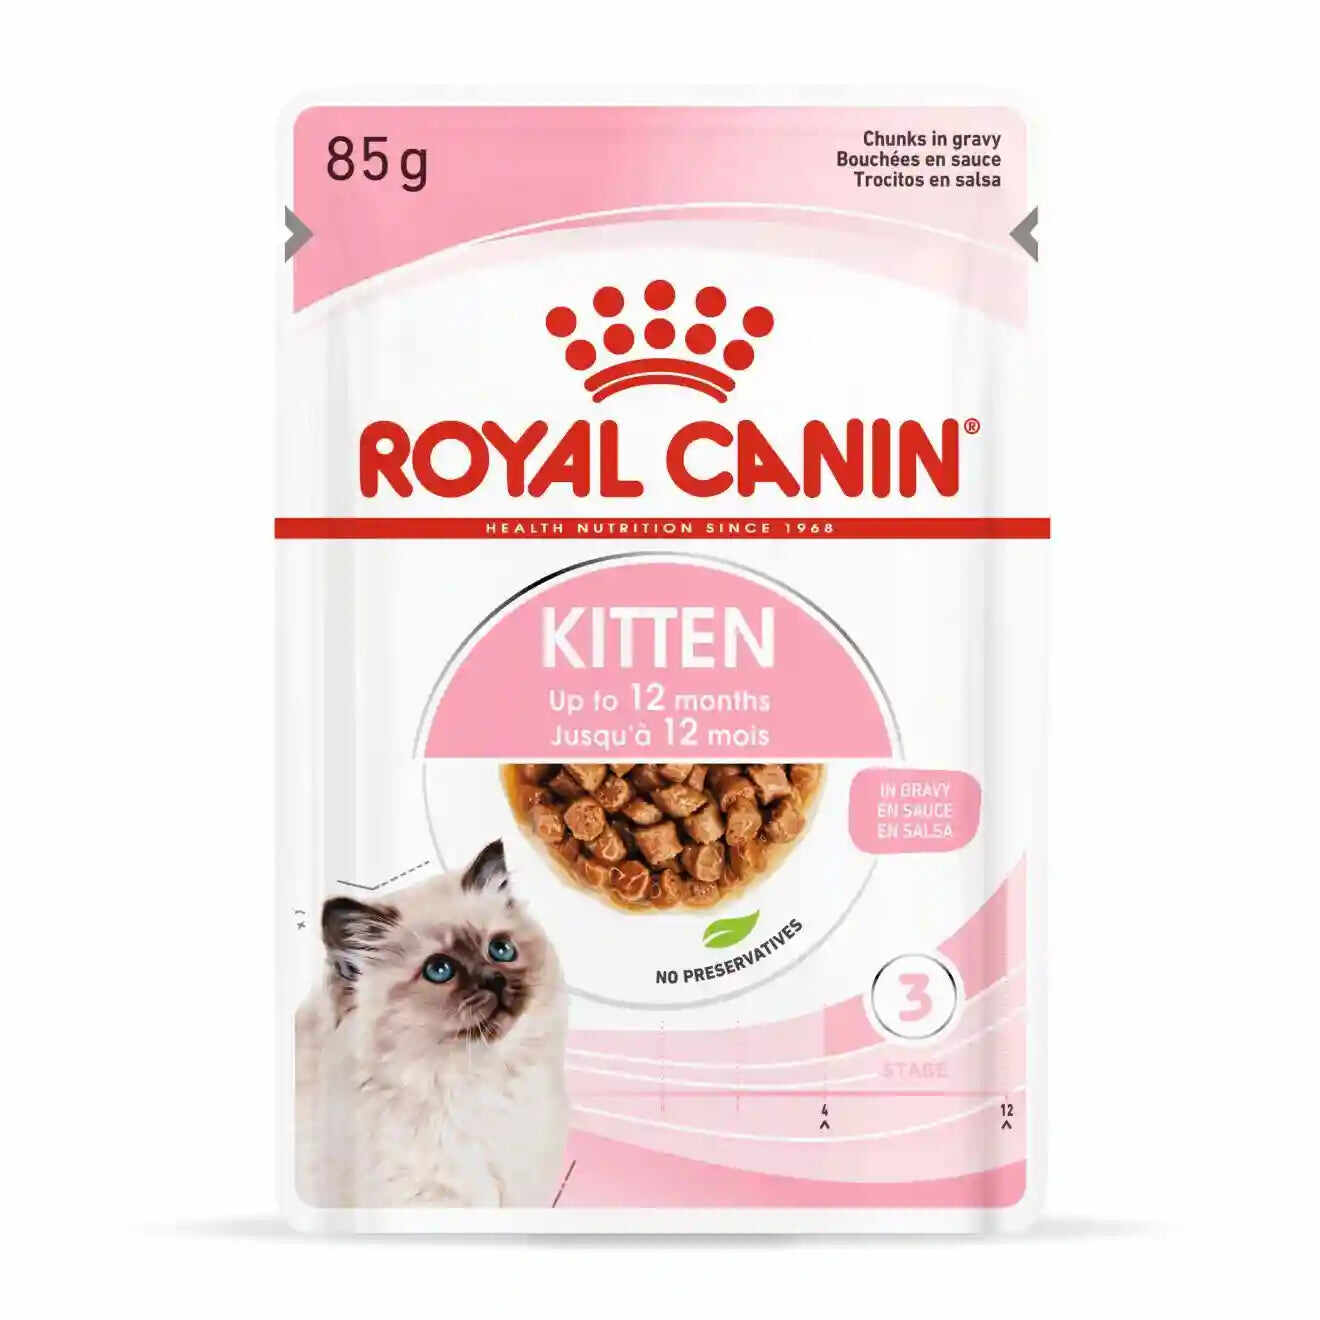 Royal Canin - Kitten Wet Food In Gravy 85g